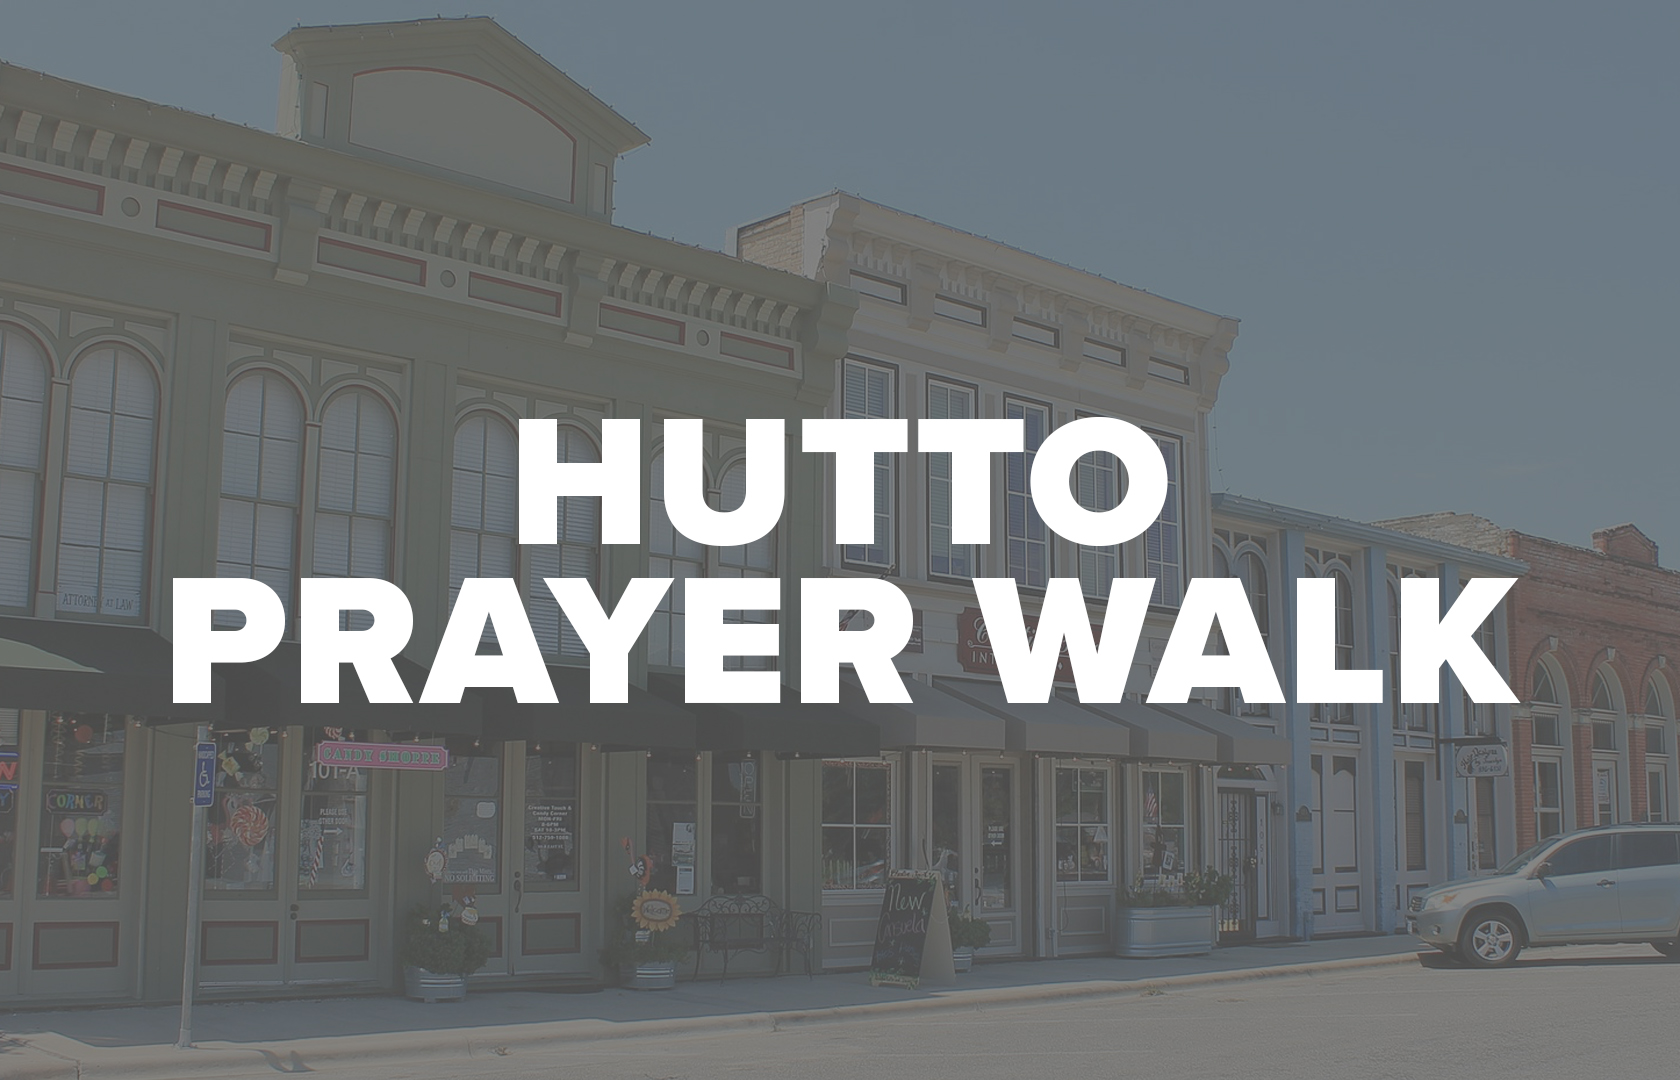 hutto prayer walk image